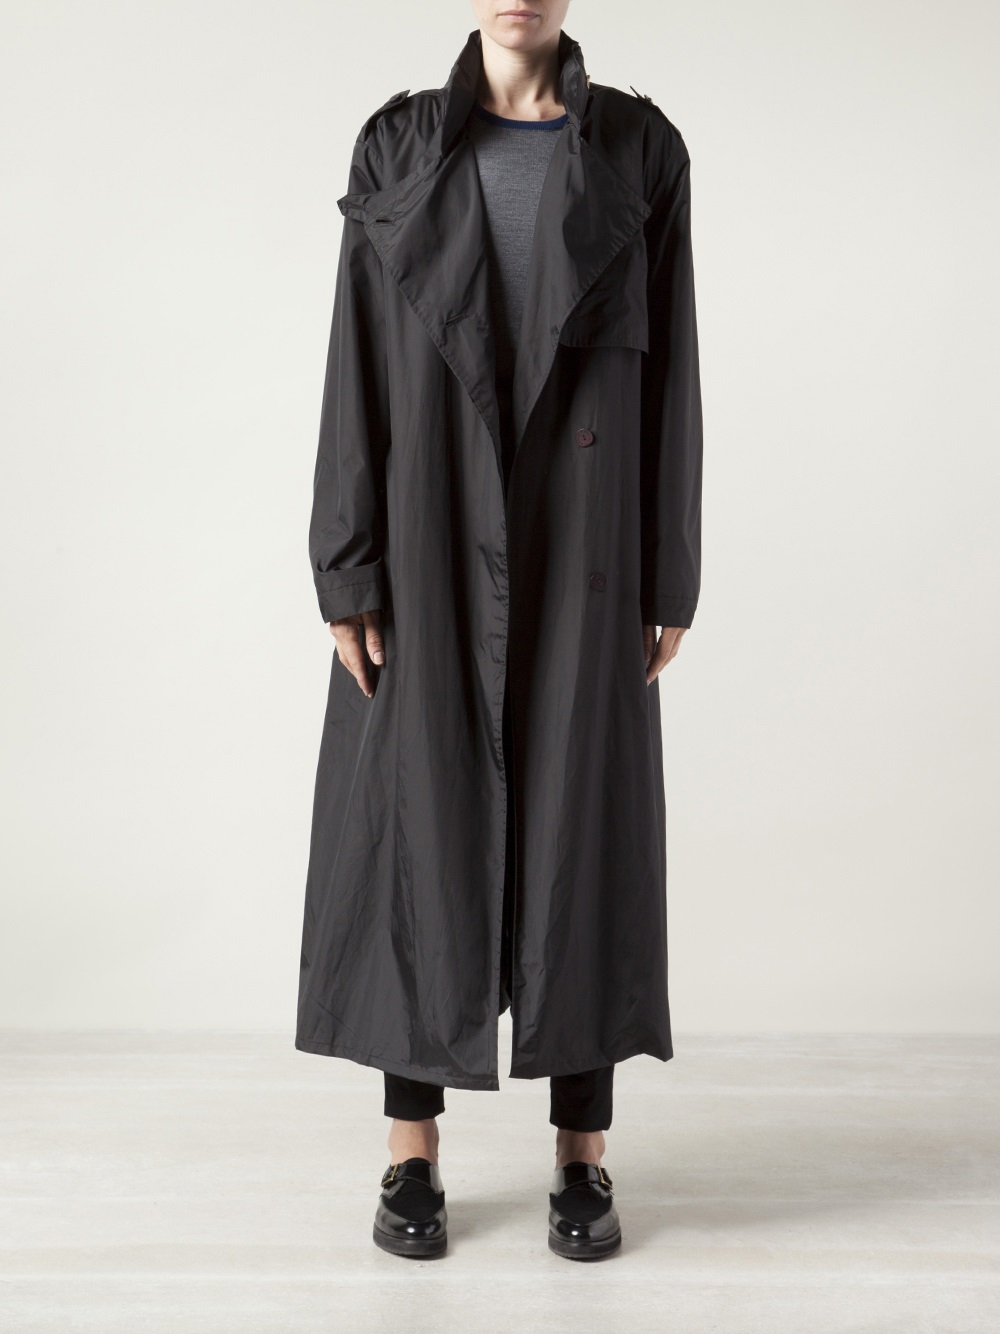 Lyst - Sonia Rykiel Long Hooded Raincoat in Black